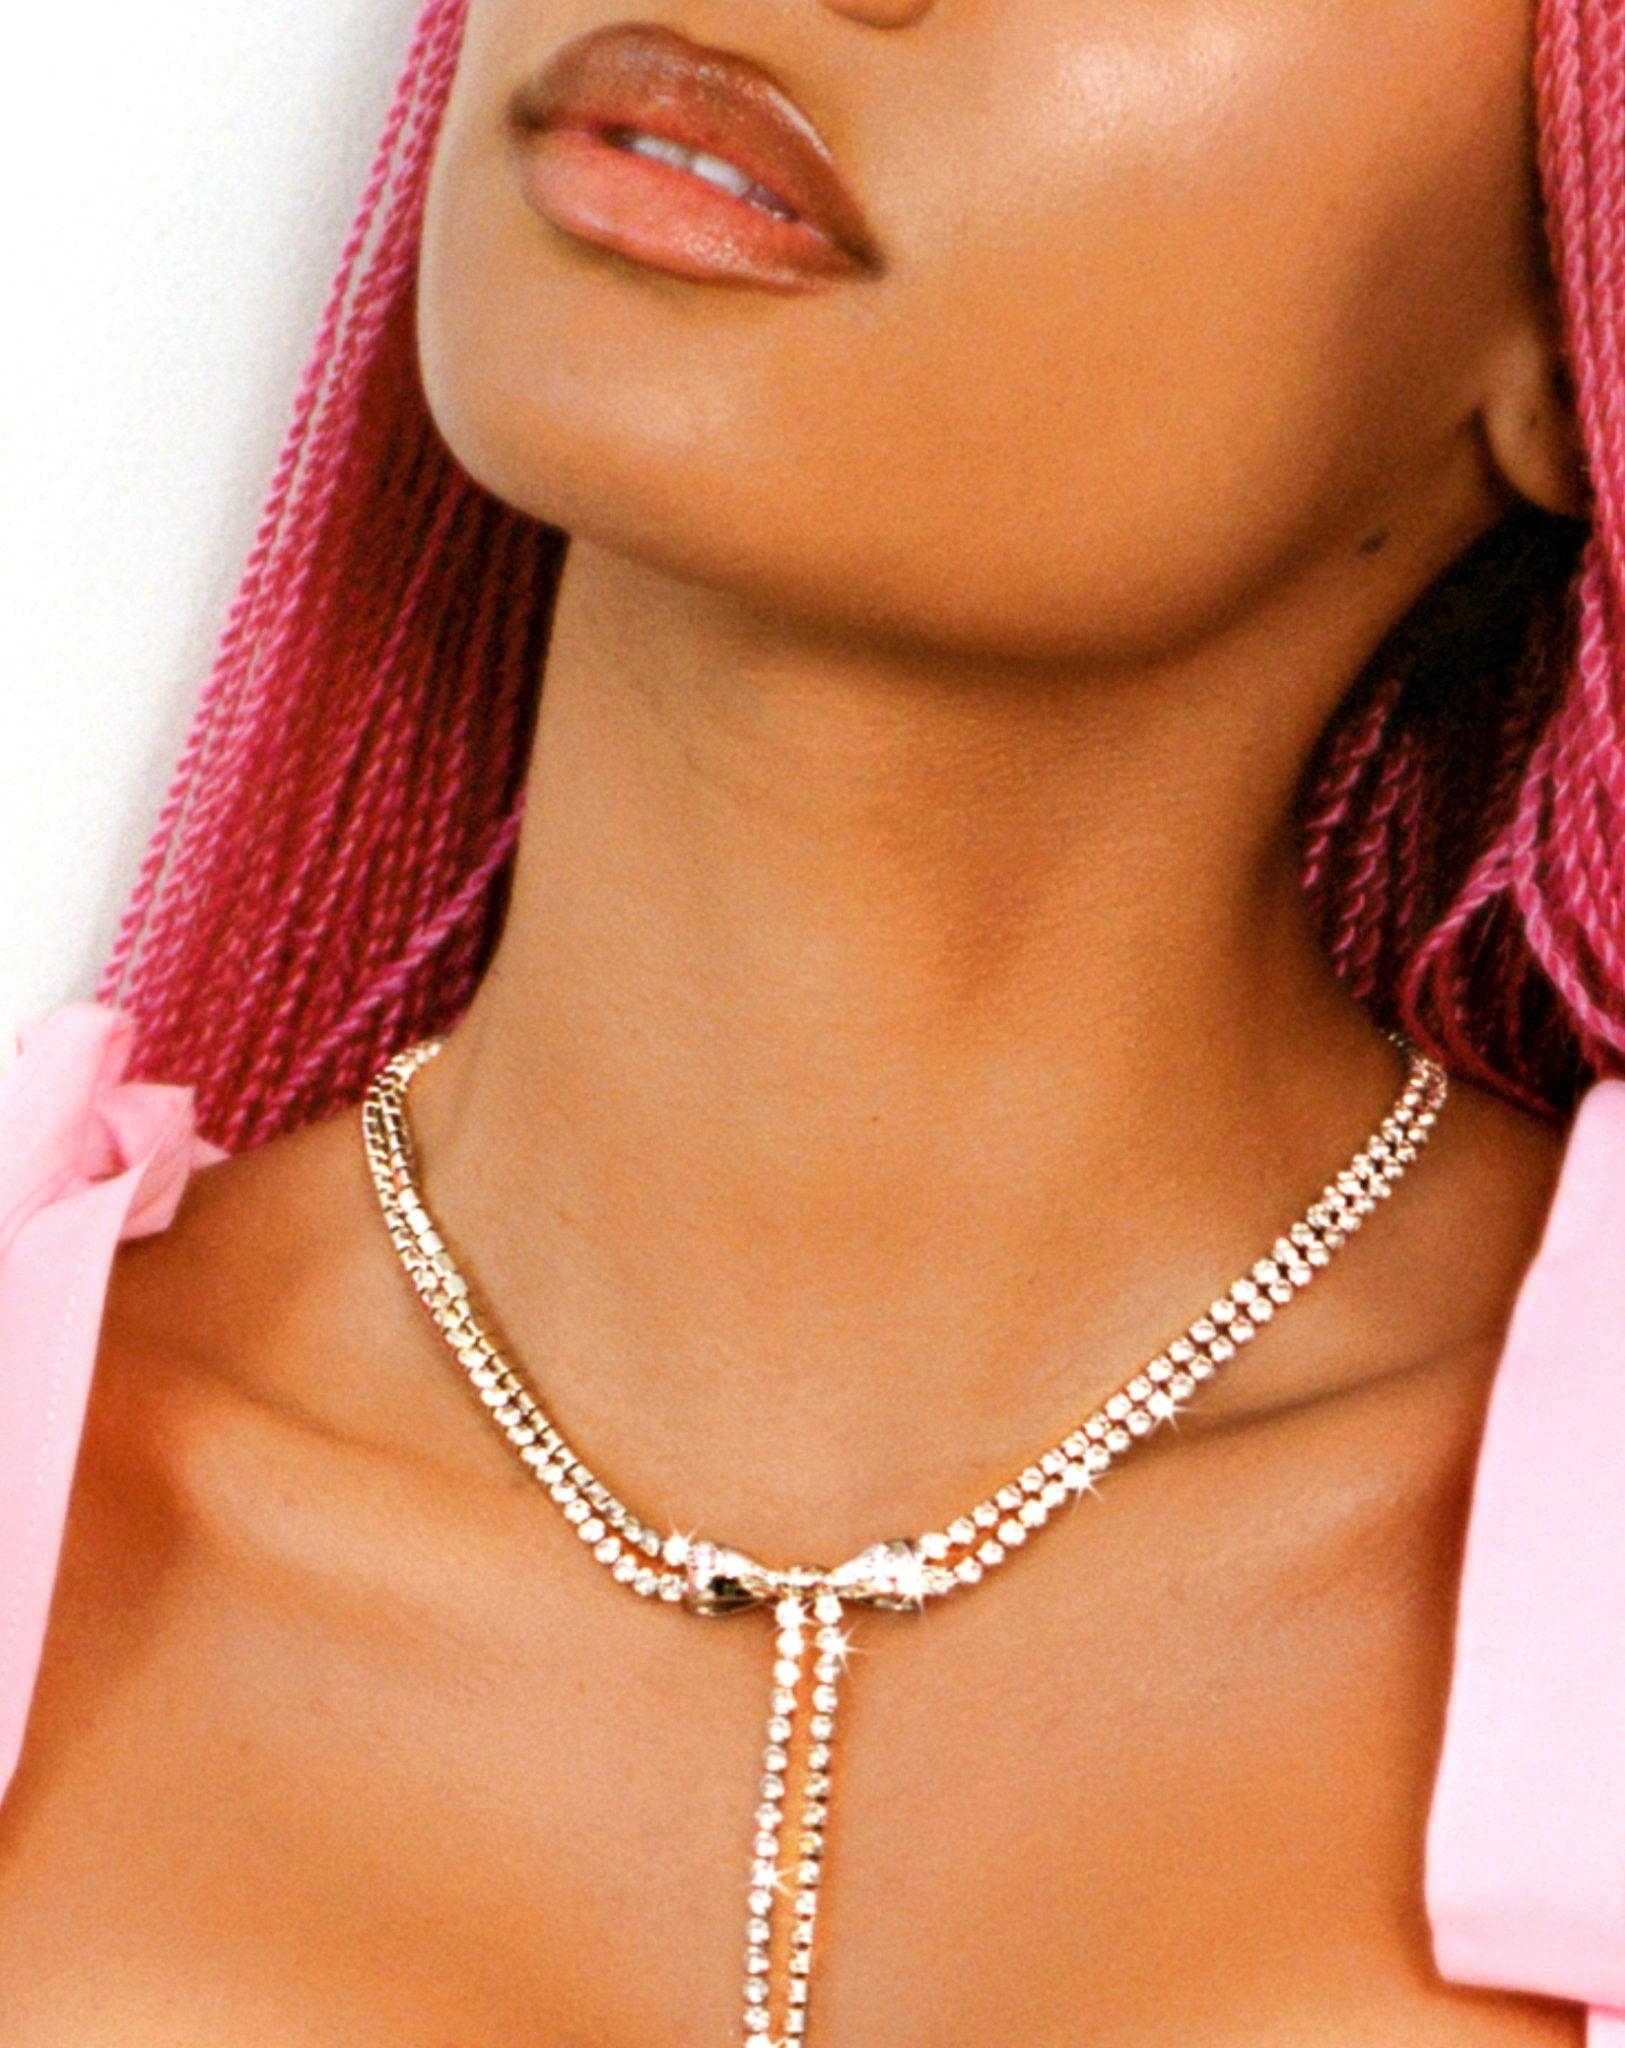 Cinna Doll Necklace - En Route Jewelry